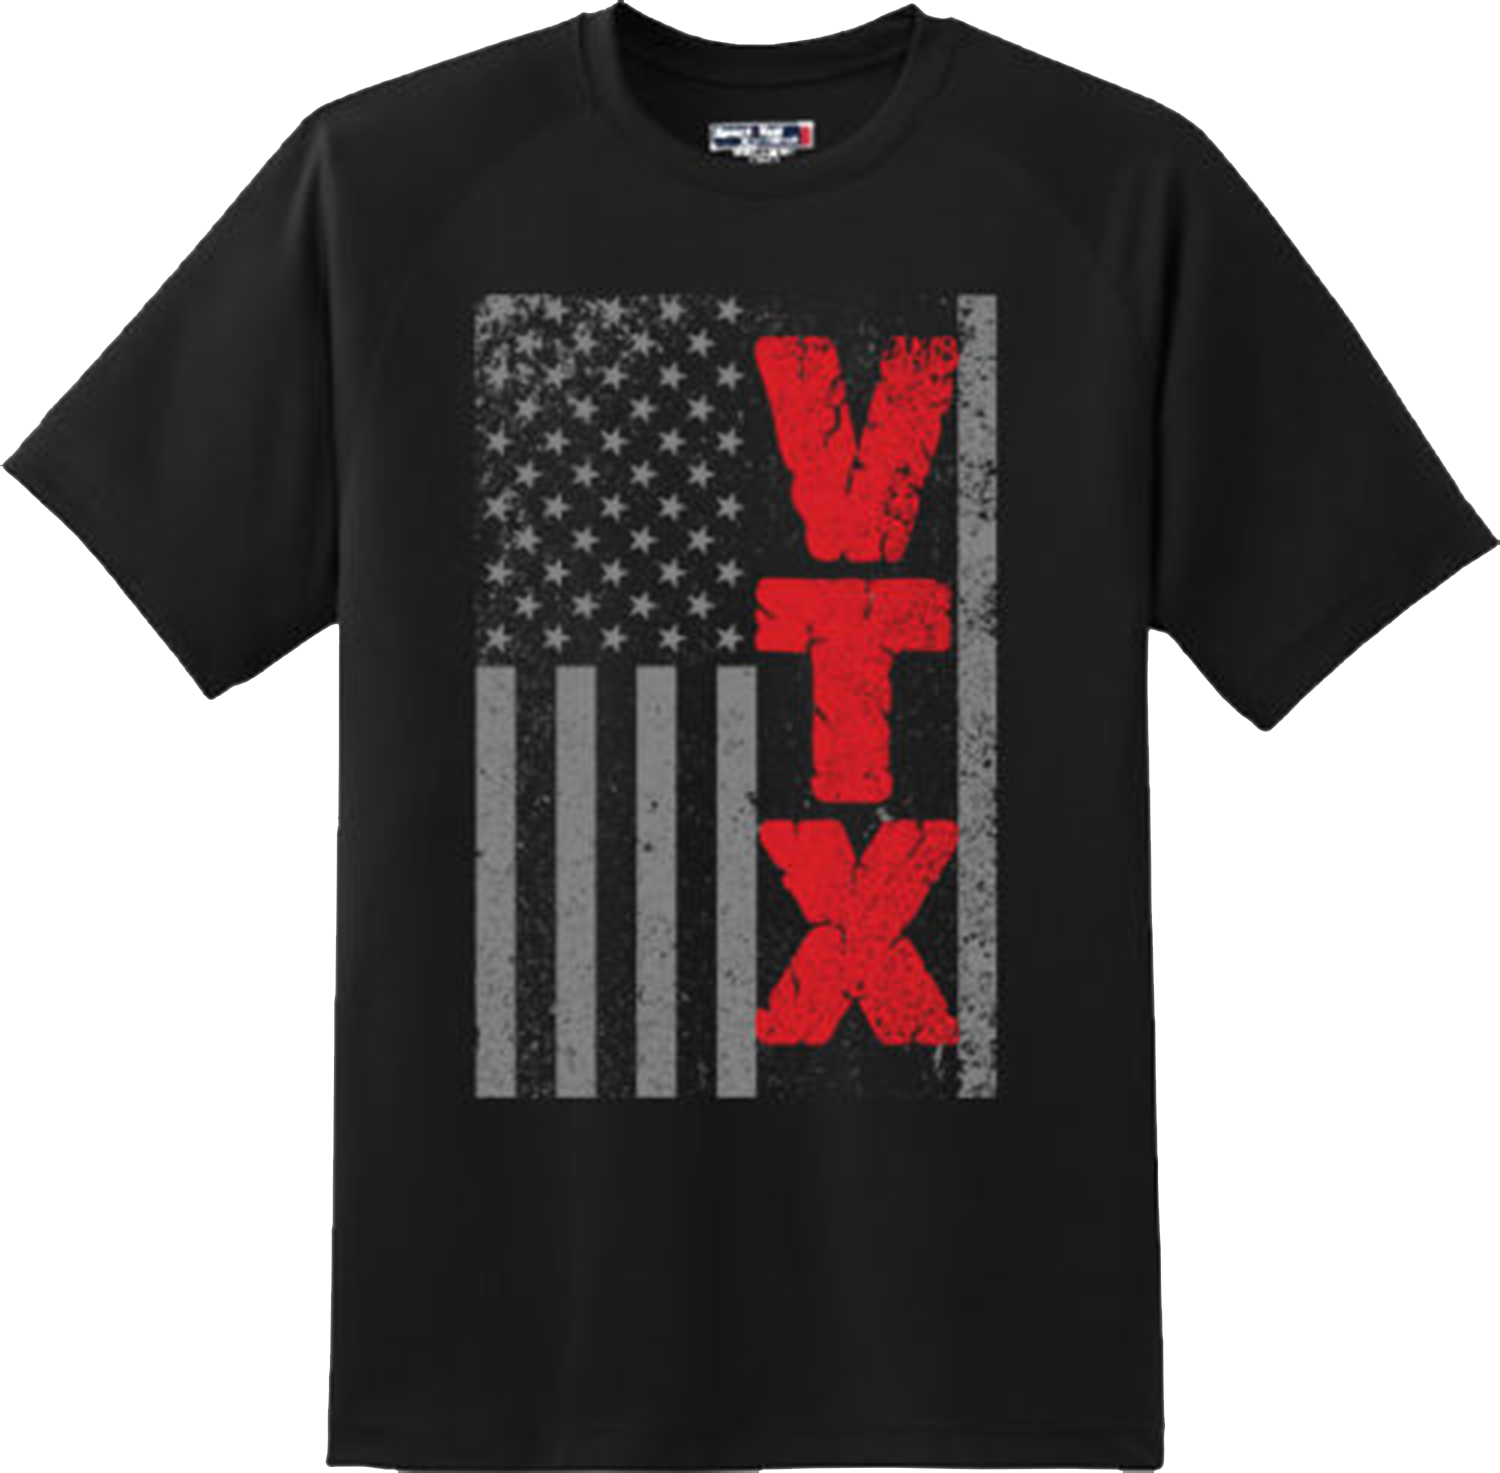 VTX US Flag Motorcycle Racing Chopper Patriotic T Shirt New Graphic Tee